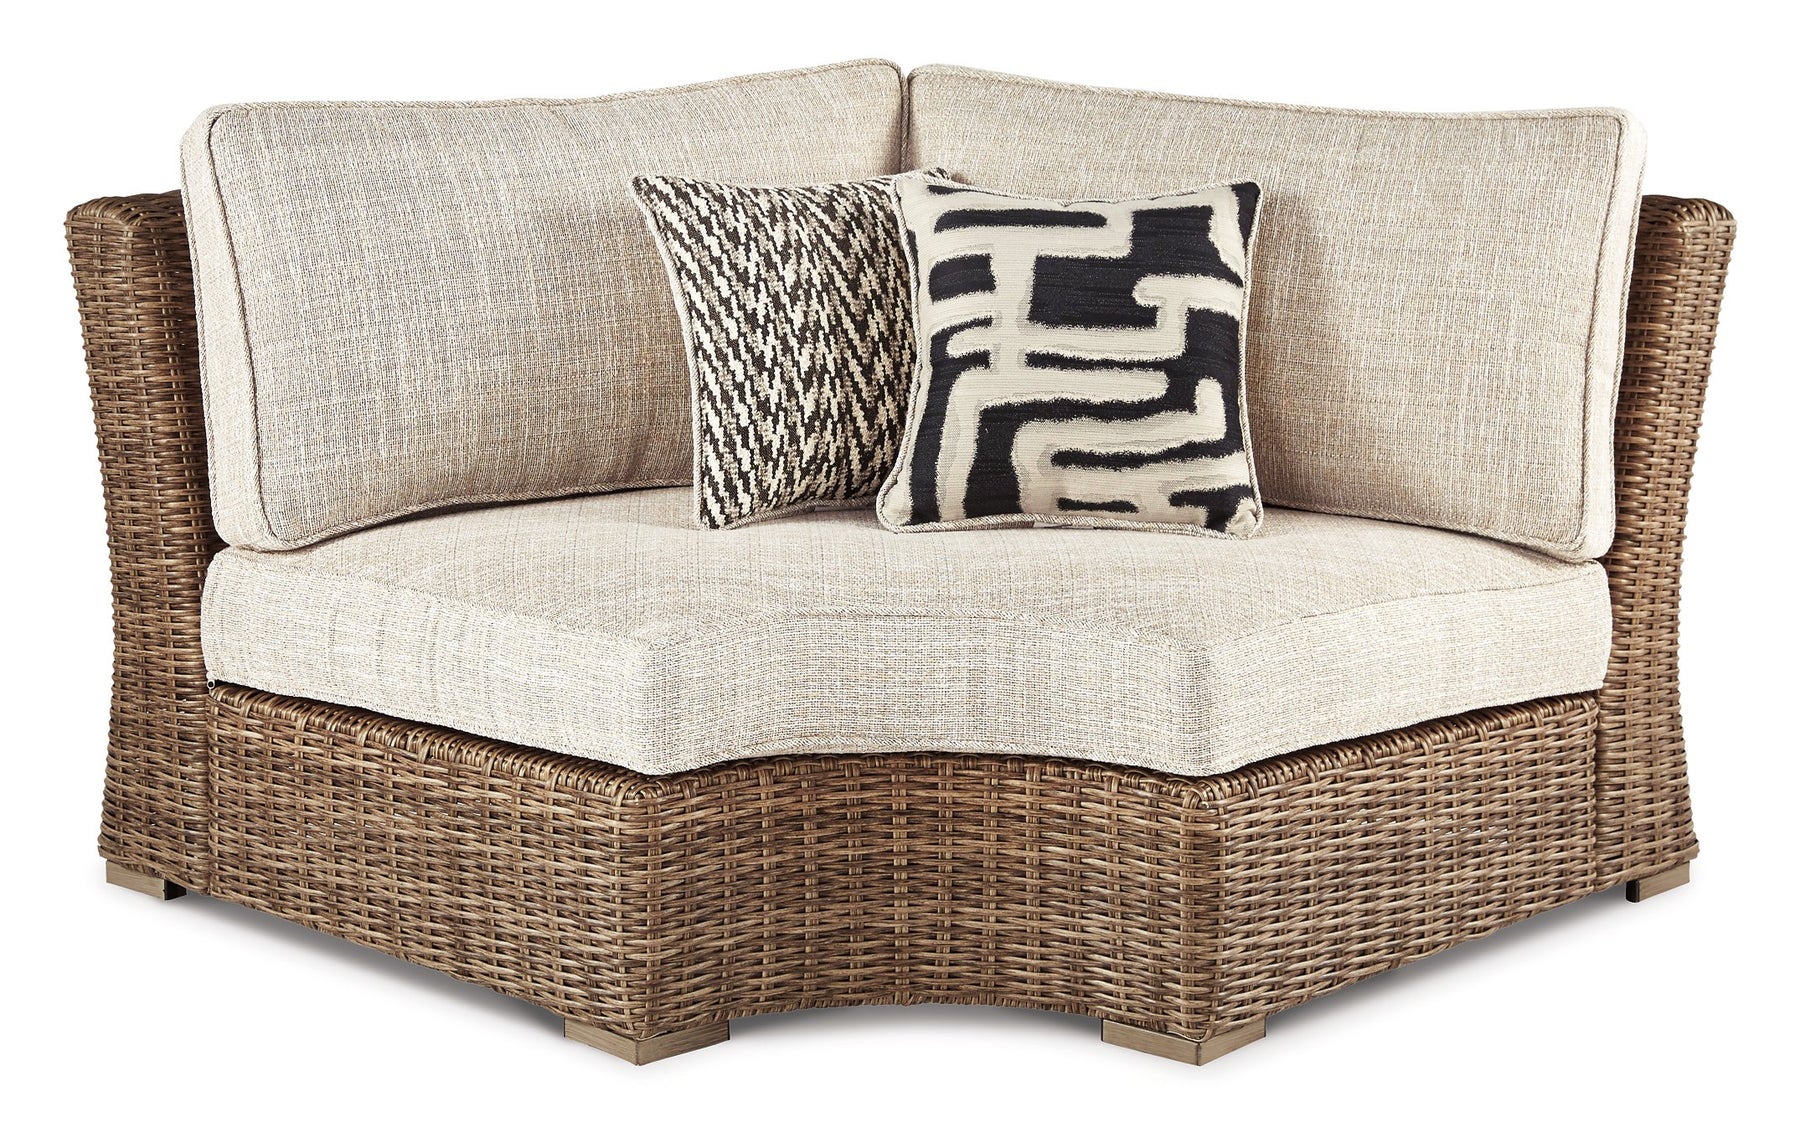 Beachcroft Curved Corner Chair with Cushion Beachcroft Curved Corner Chair with Cushion Half Price Furniture